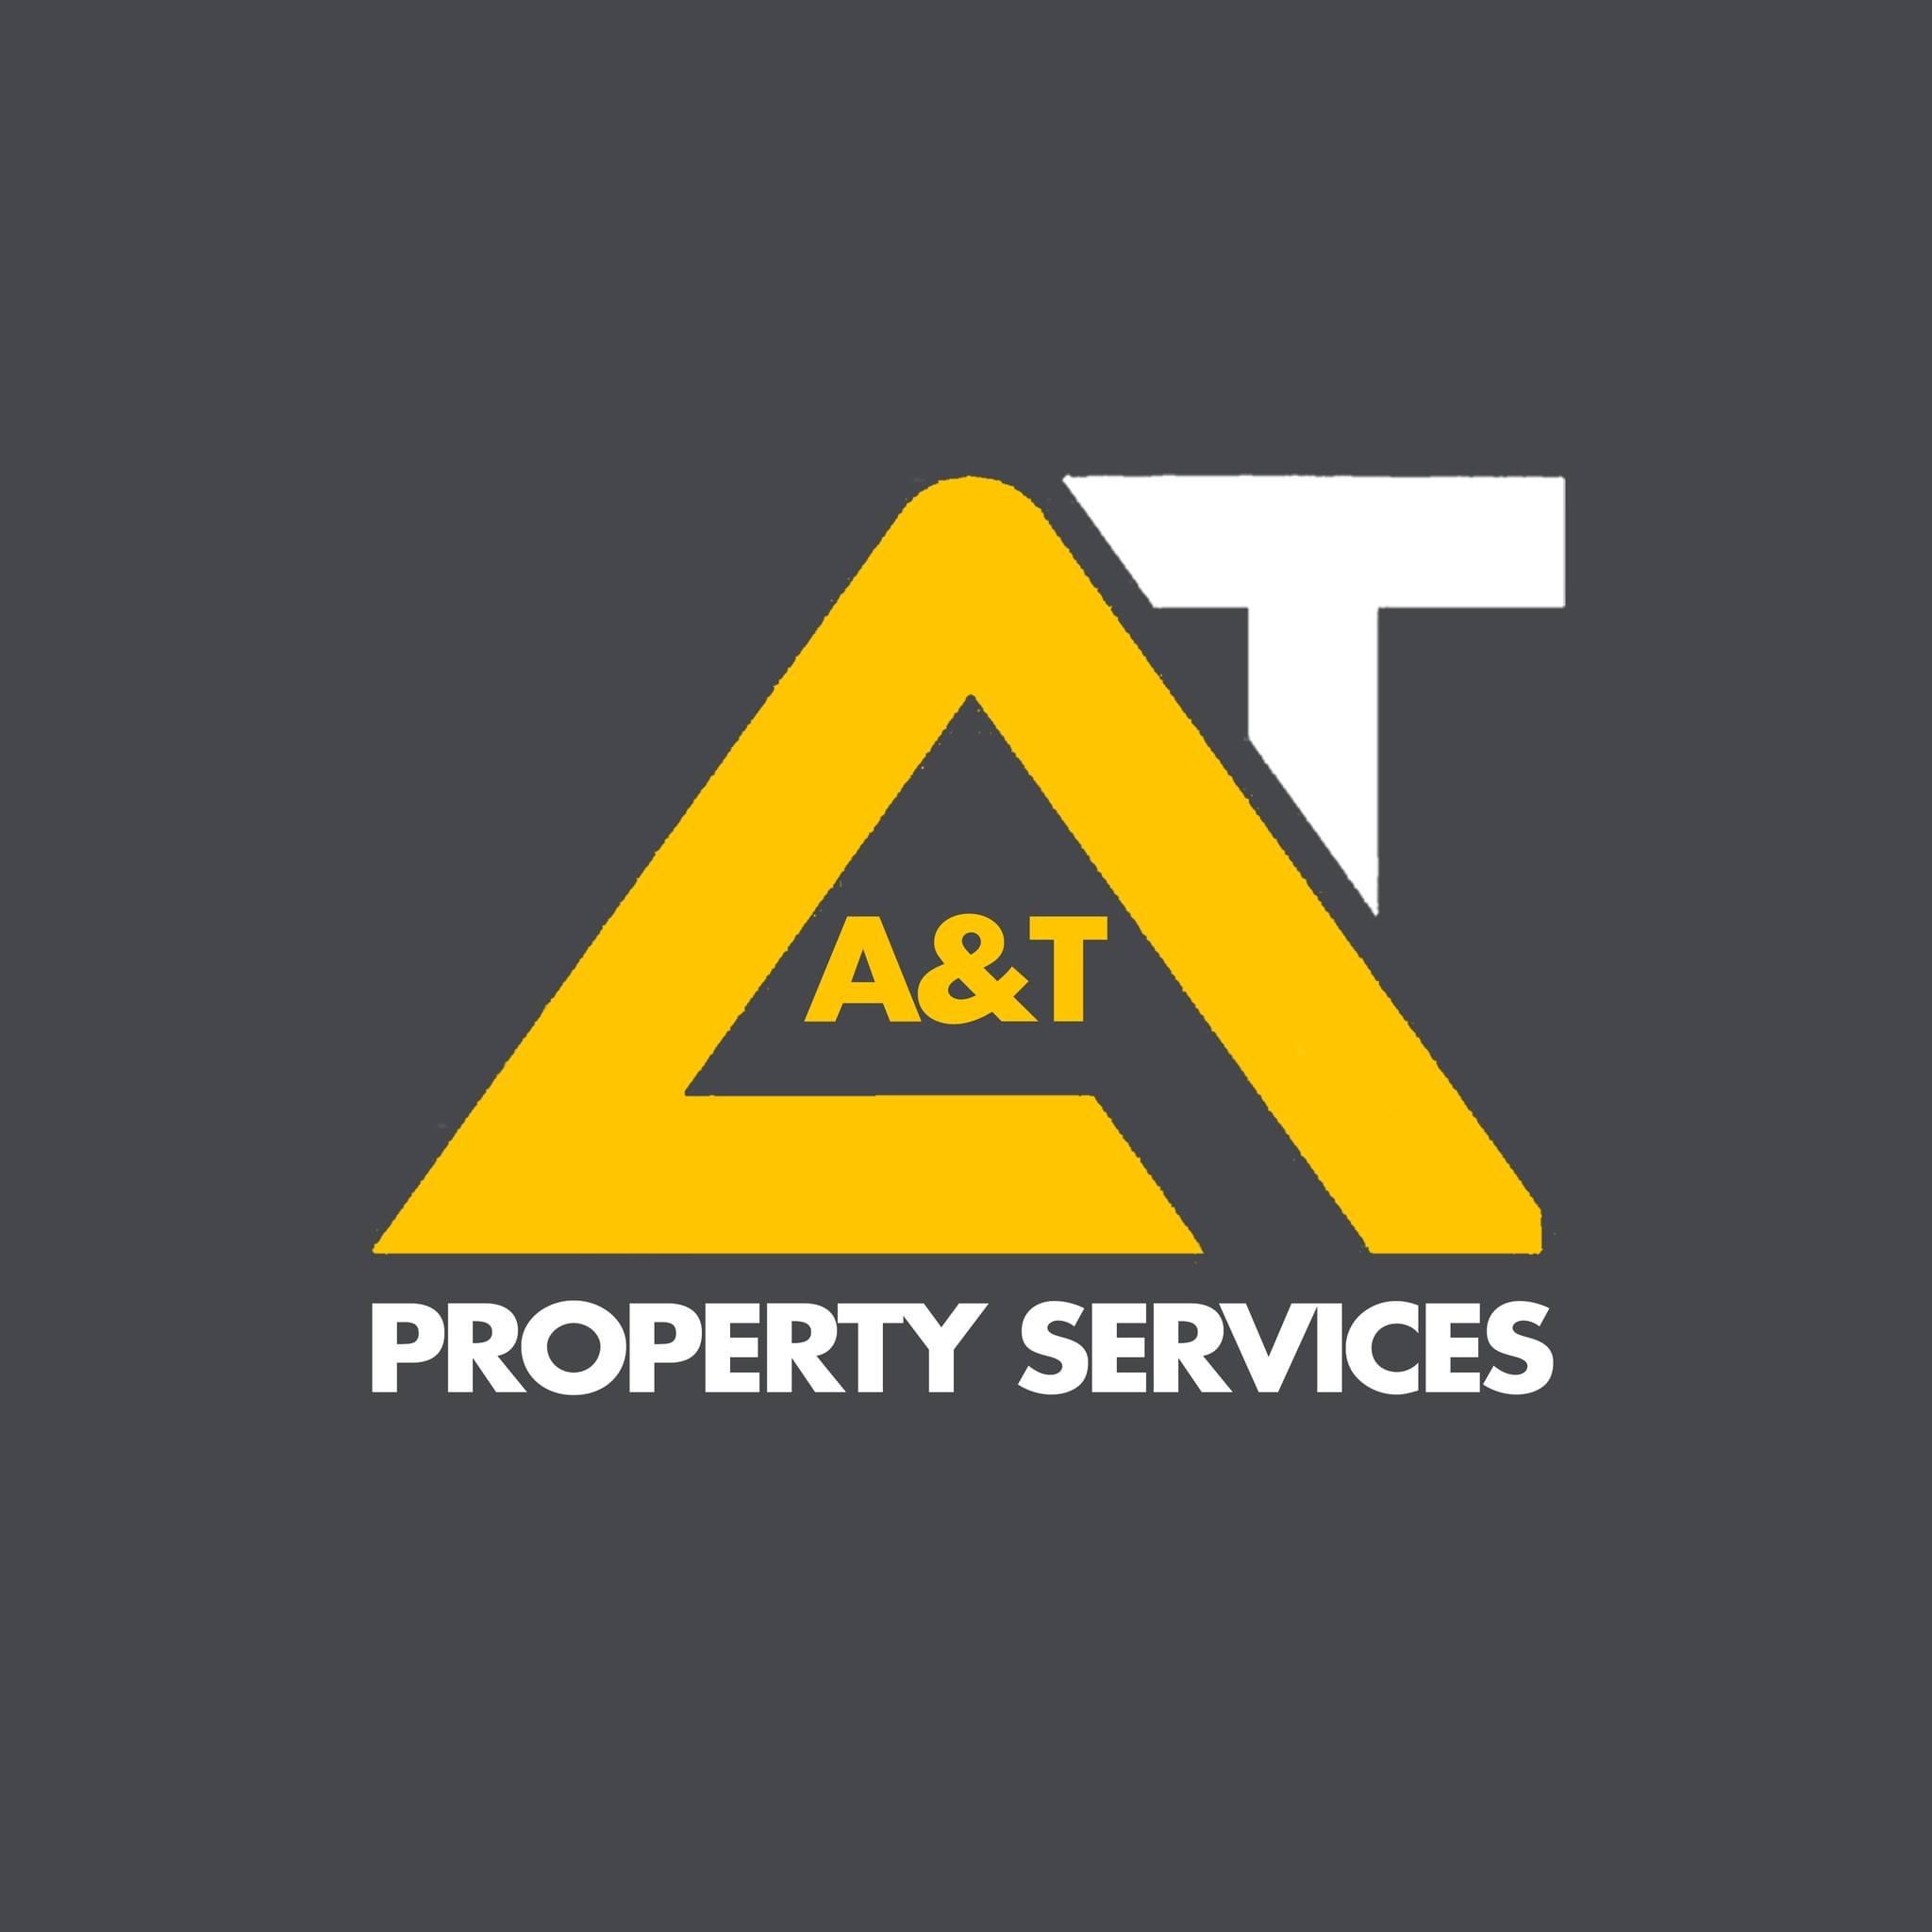 A & T Property Services